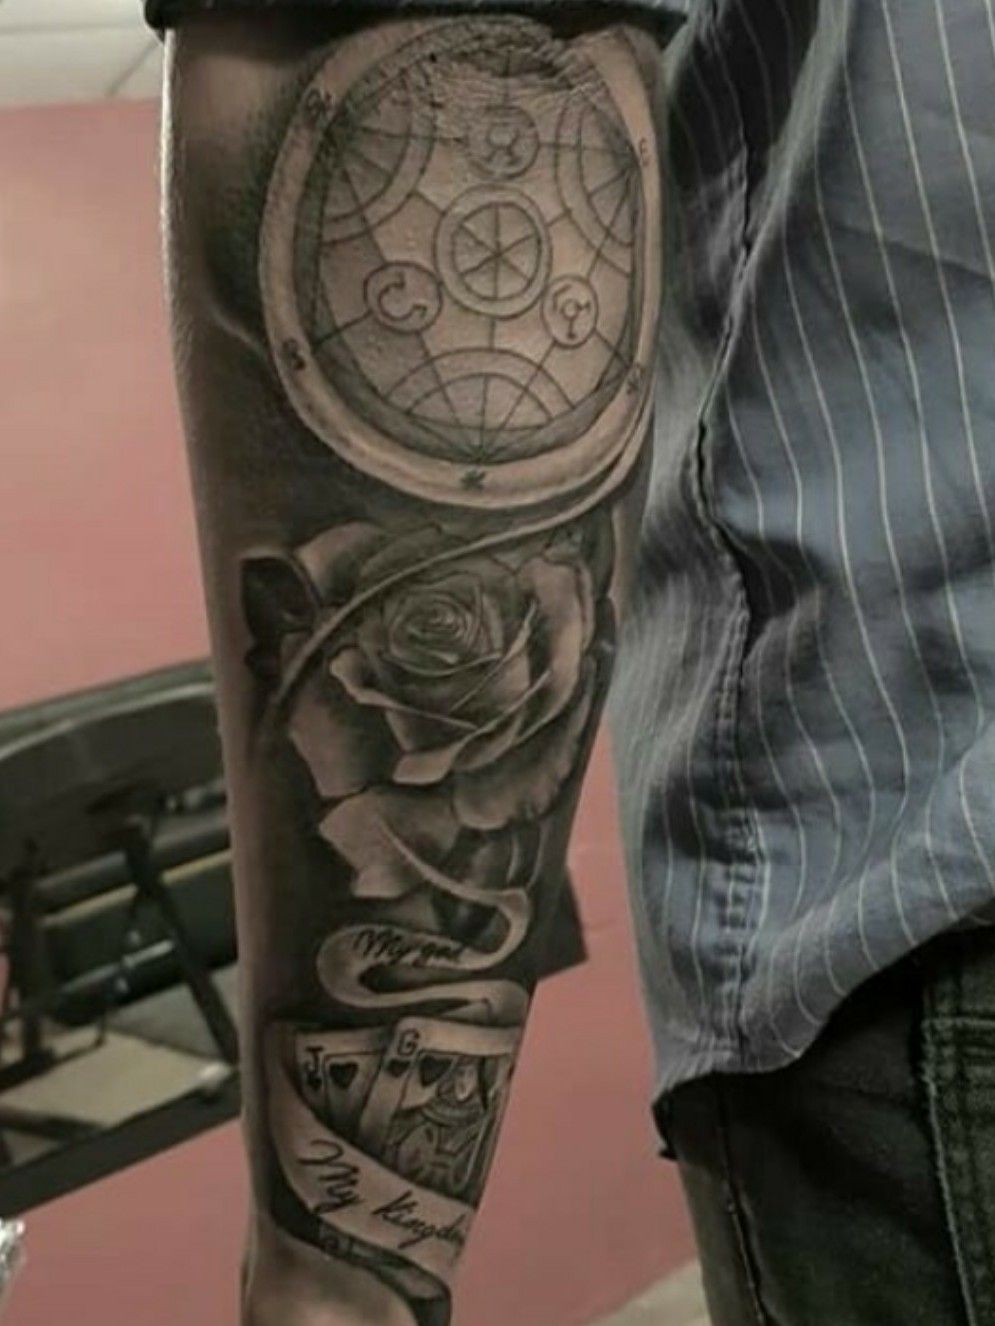 Ramón on Twitter Robson Carvalho gt Fullmetal Alchemist tattoo ink  art httpstcoUbYvc7R4aN  Twitter